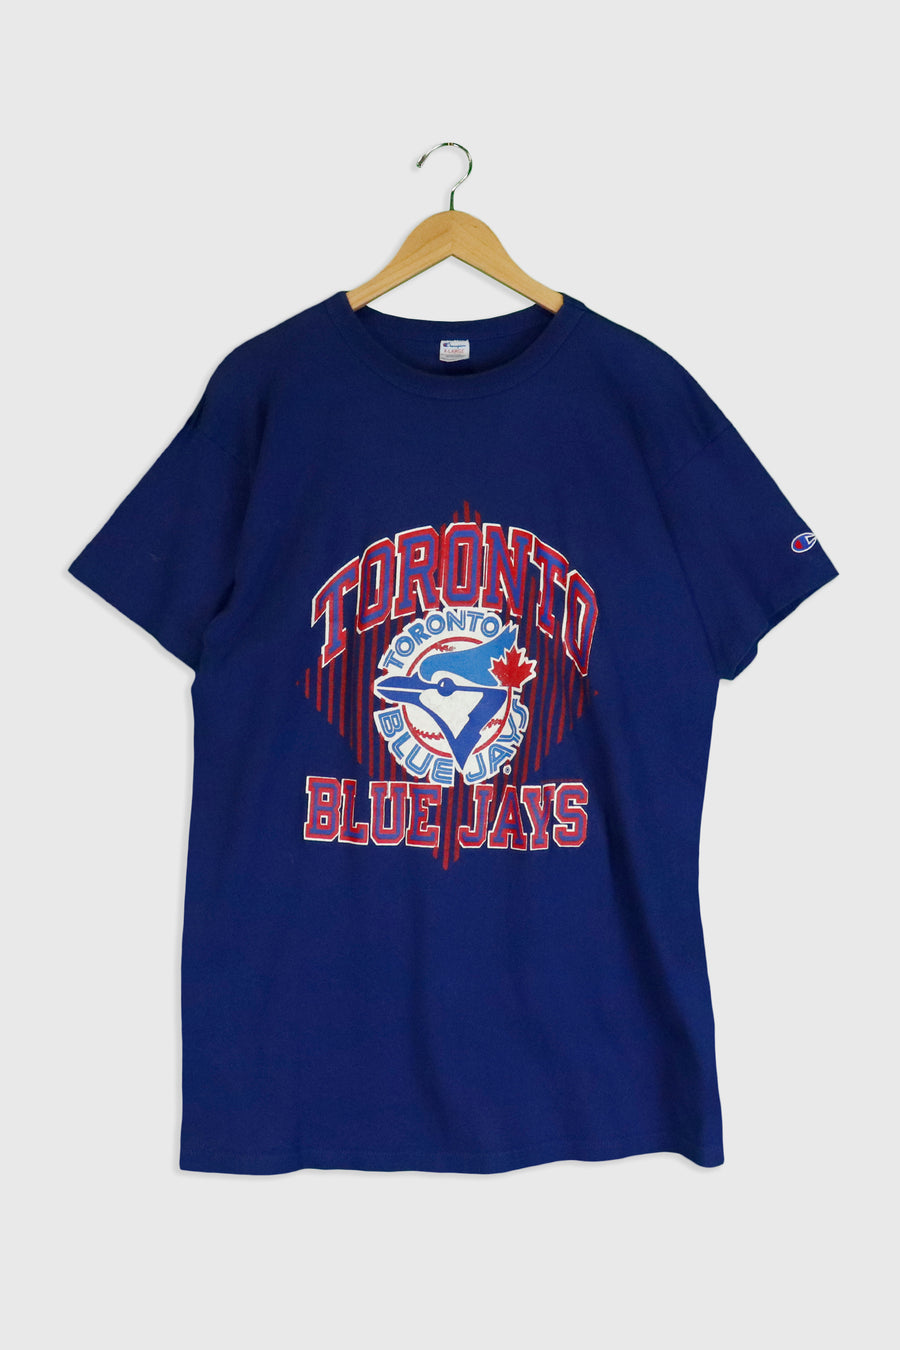 Vintage Champion Toronto Bluejays T Shirt Sz XL